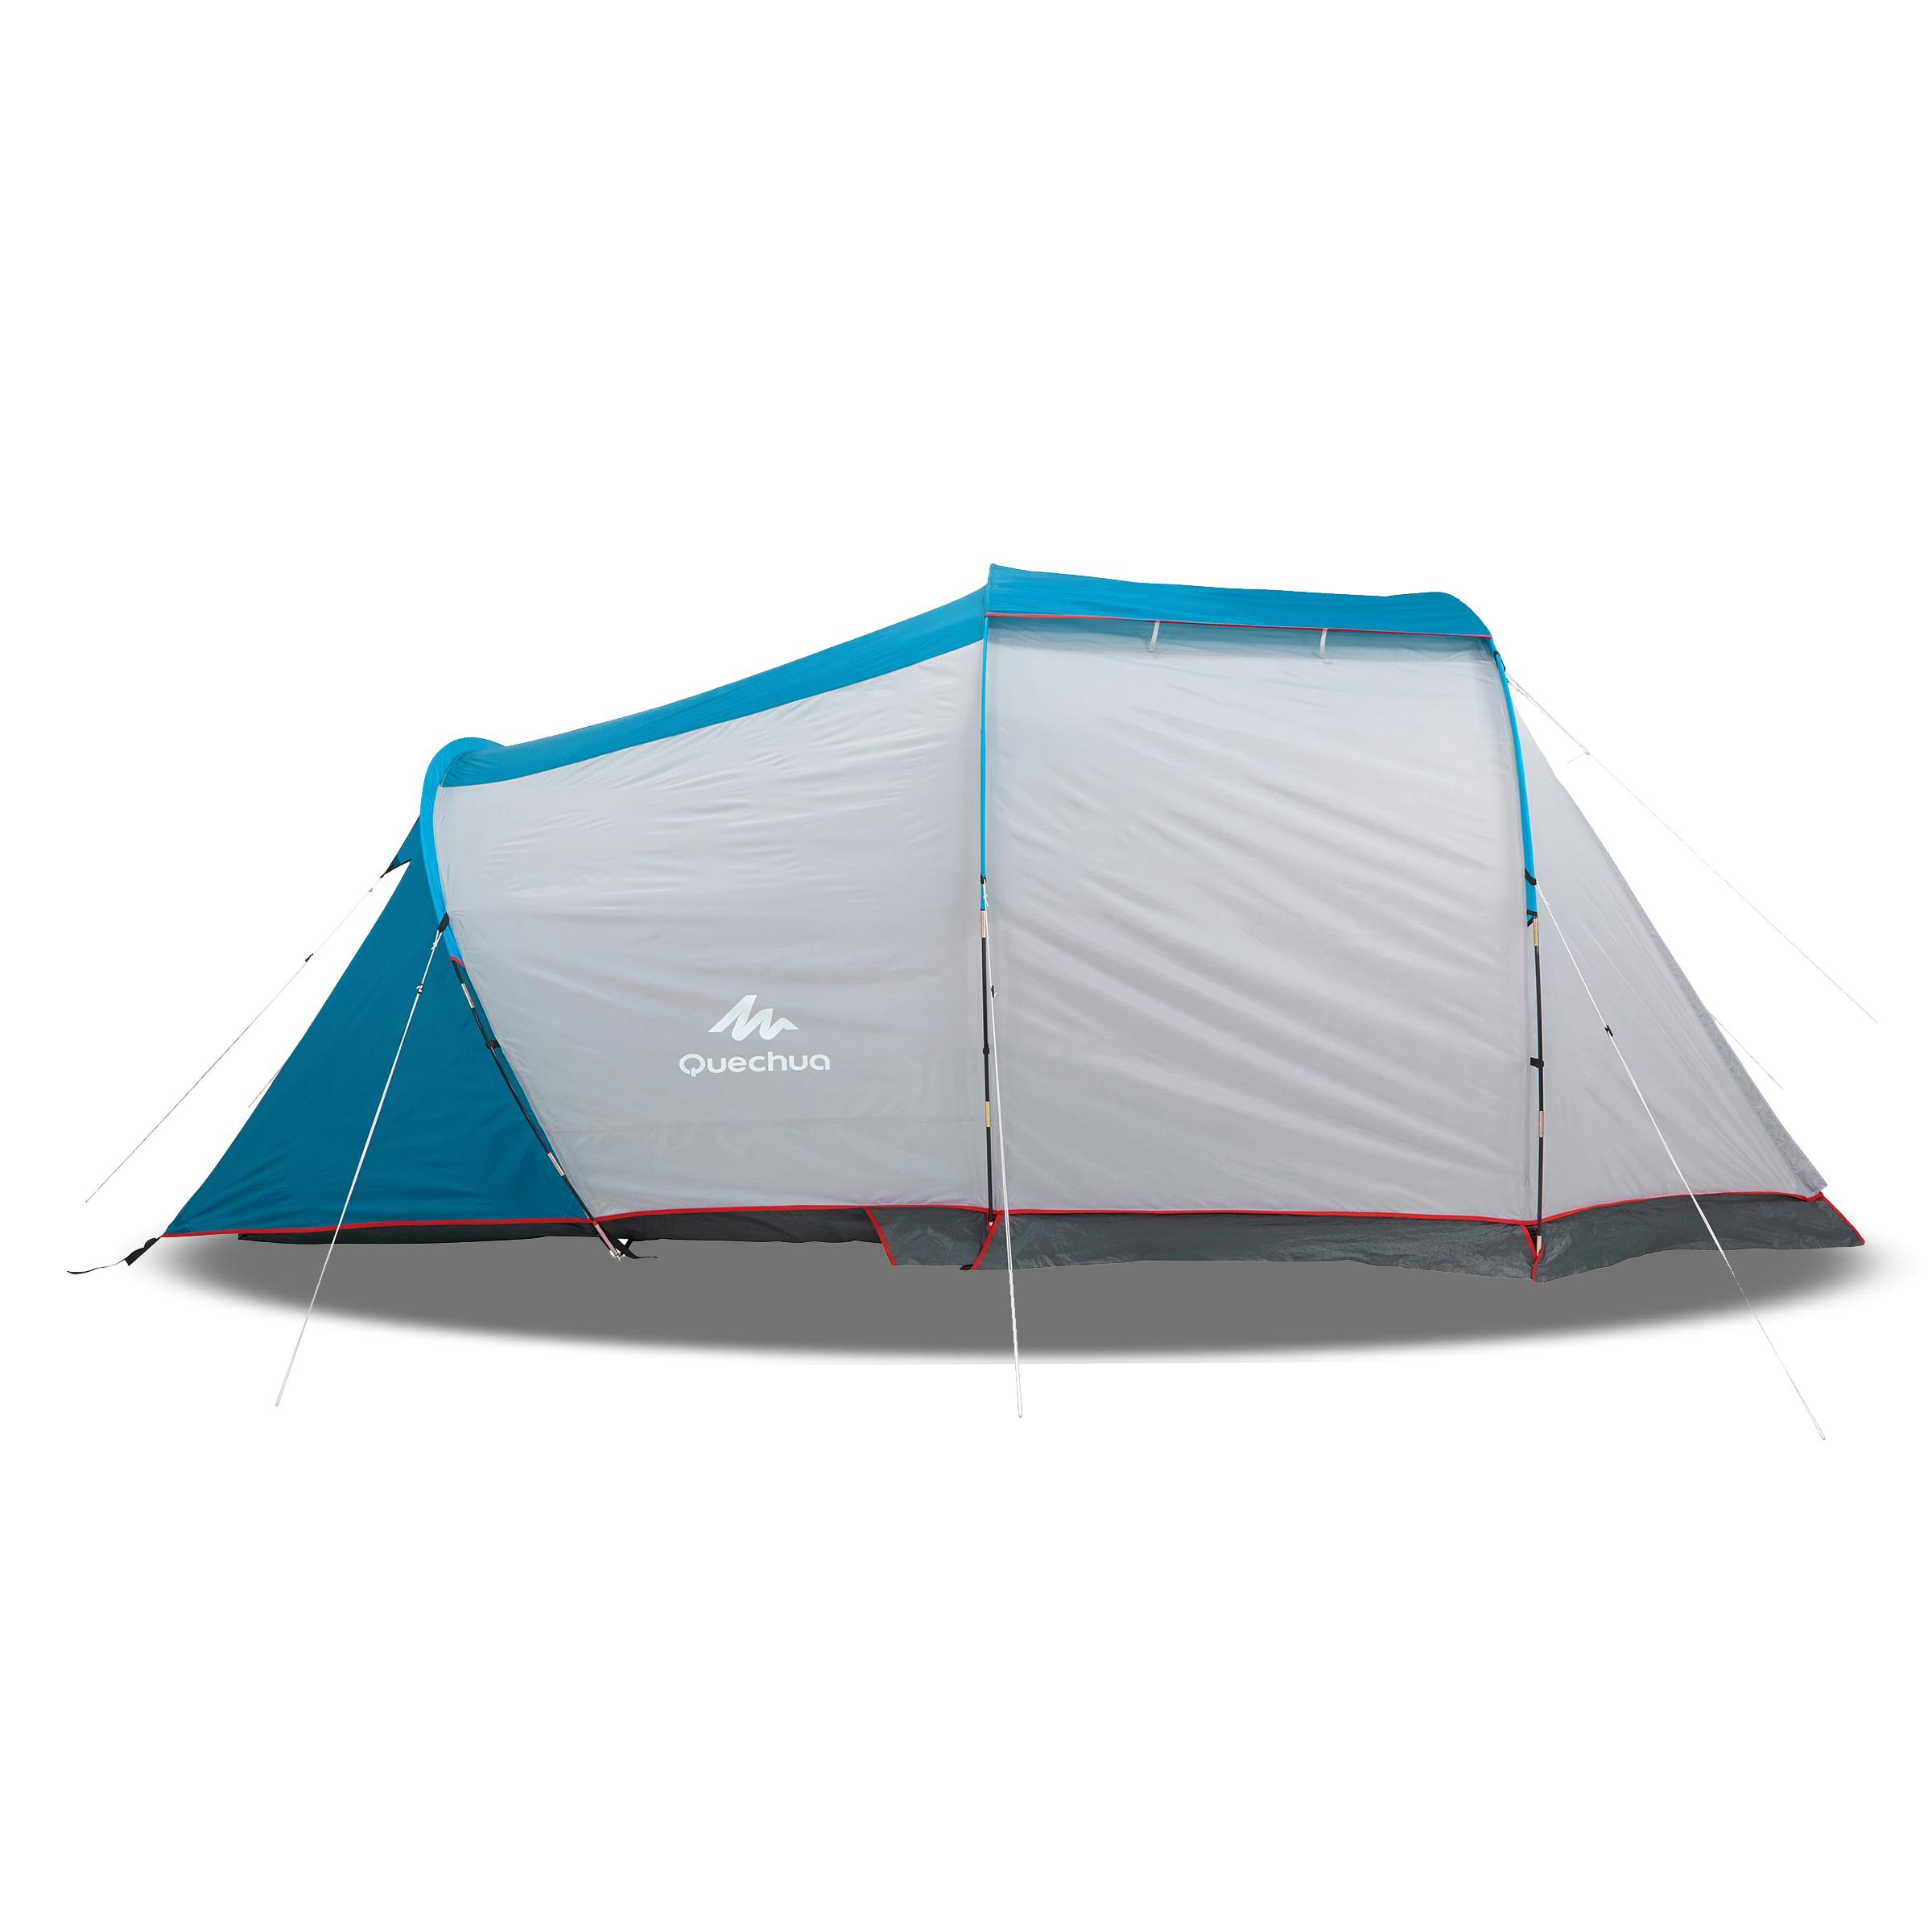 decathlon 4.1 tent